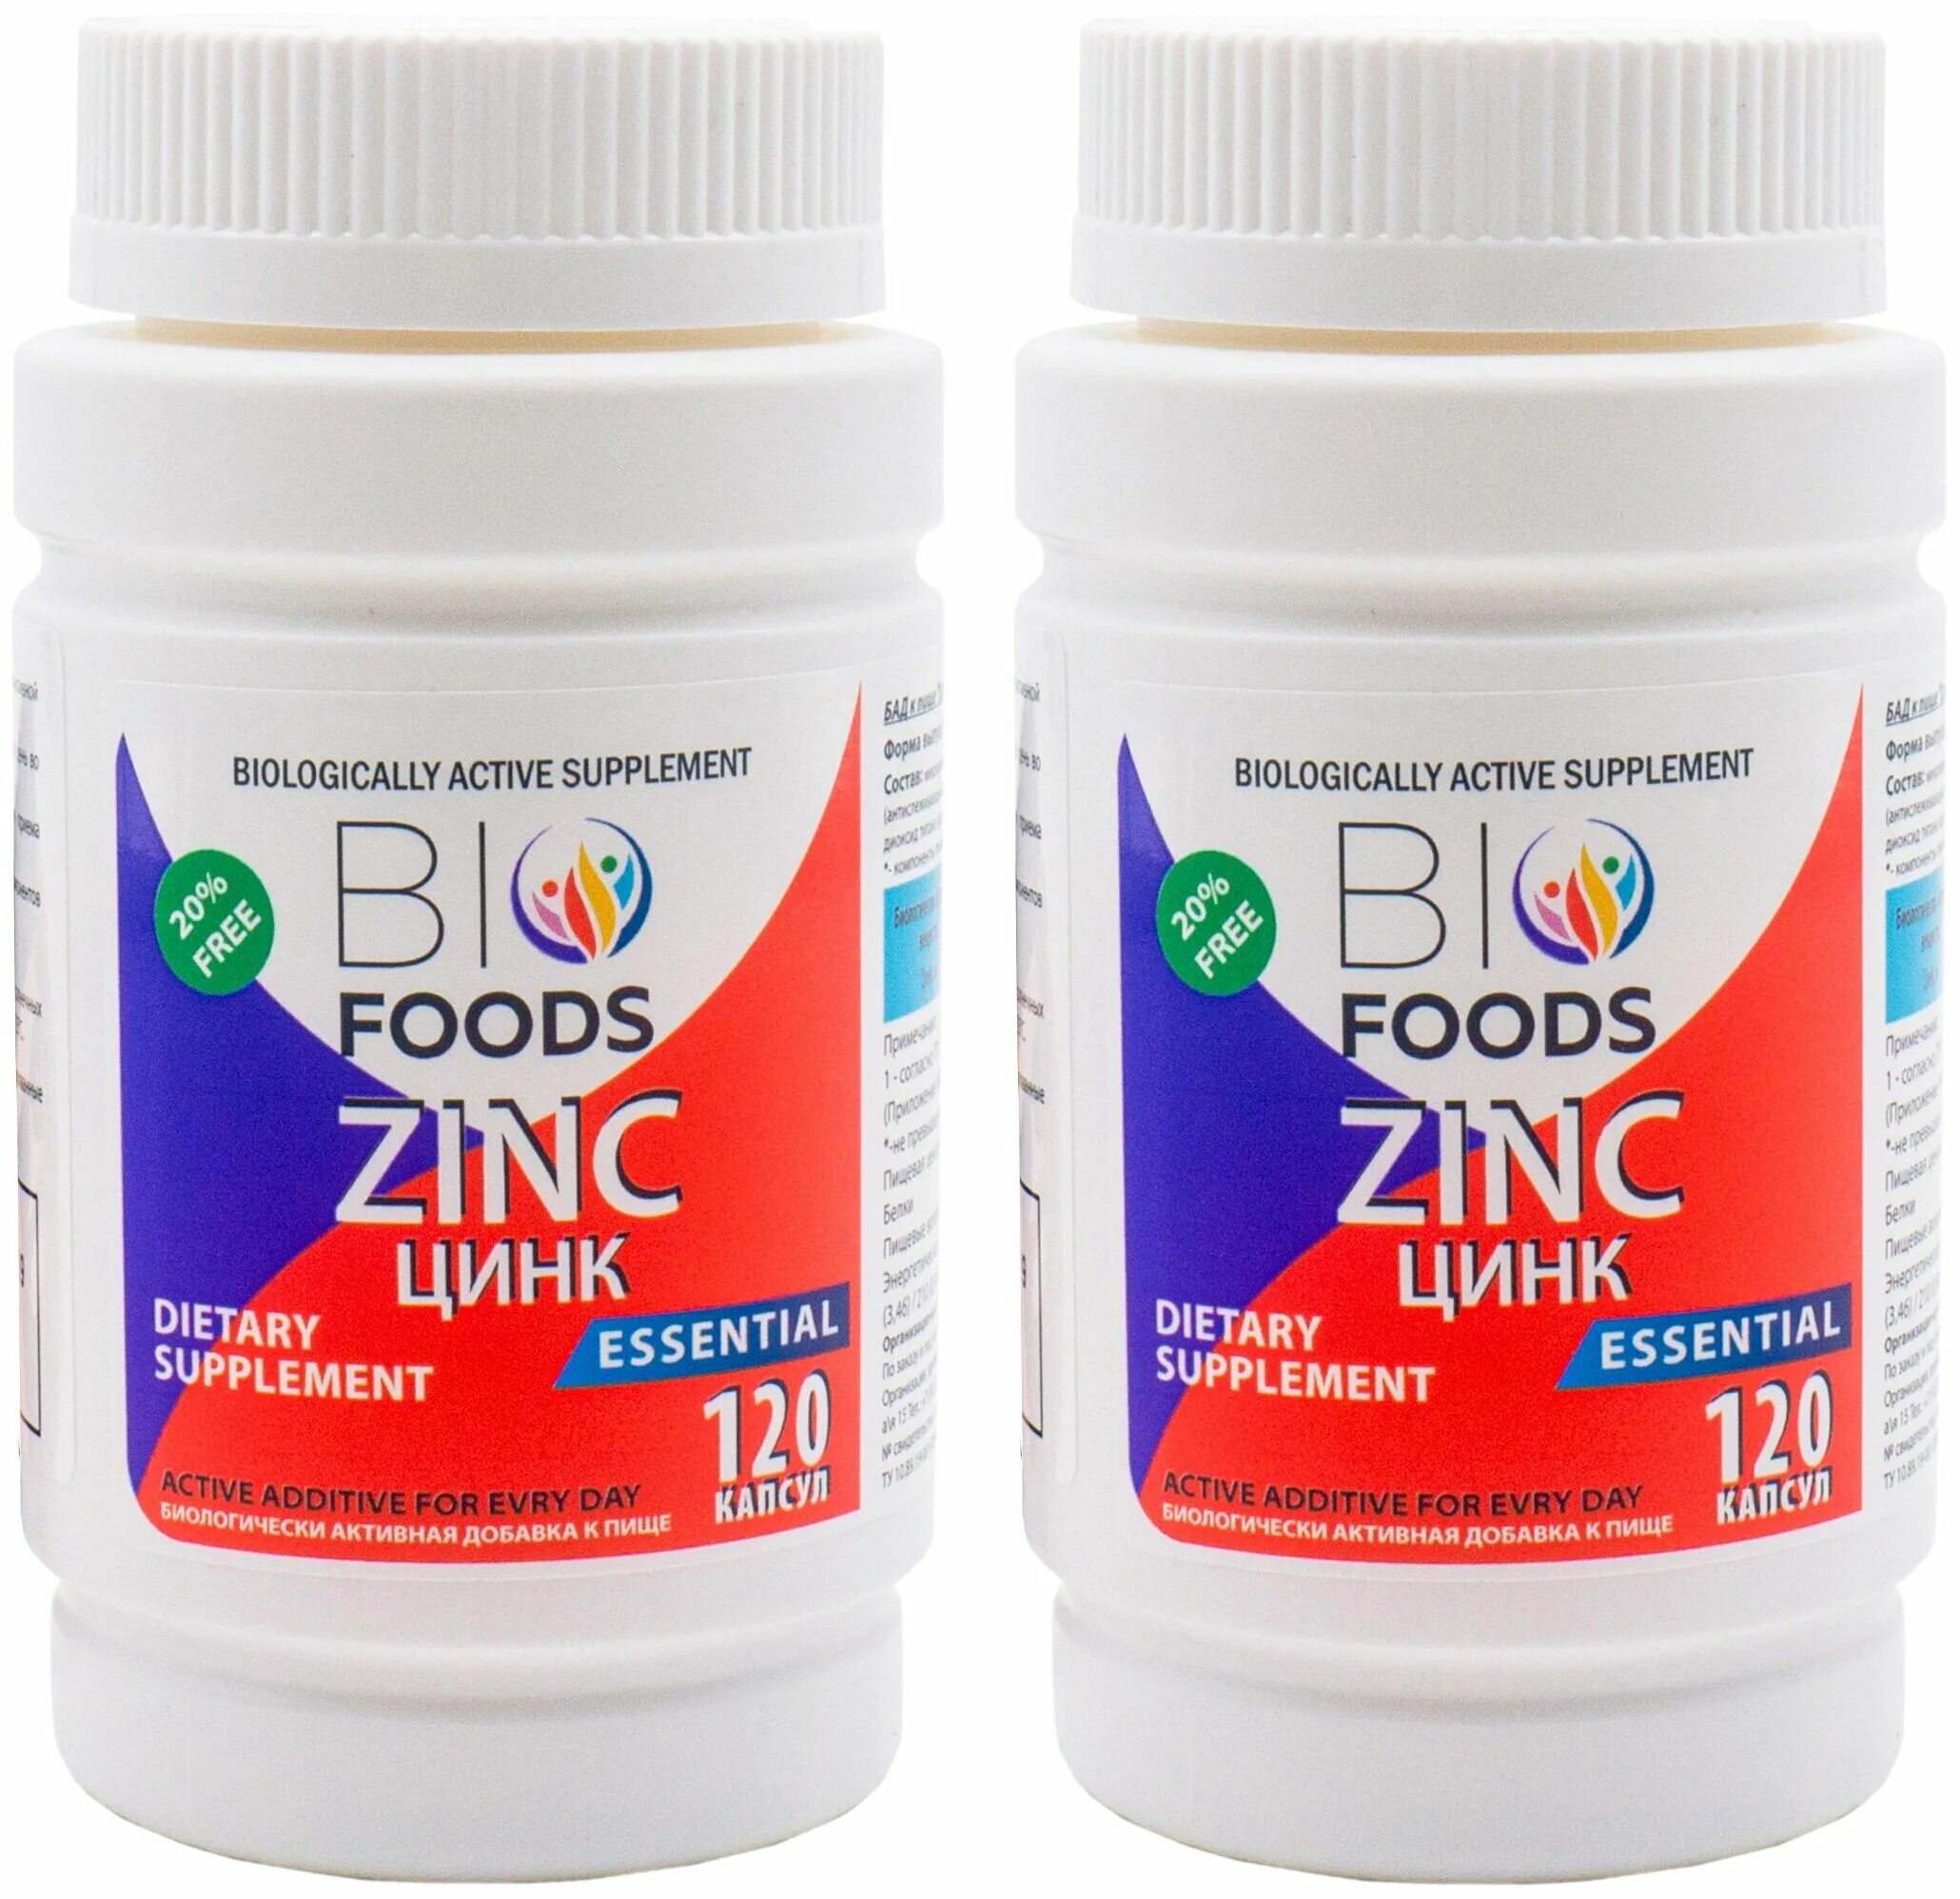 25 zn. Цинк БАДЫ. Jarrow Formulas Zinc Balance капсулы. NW foods цинк. Цинк Bio foods отзывы.